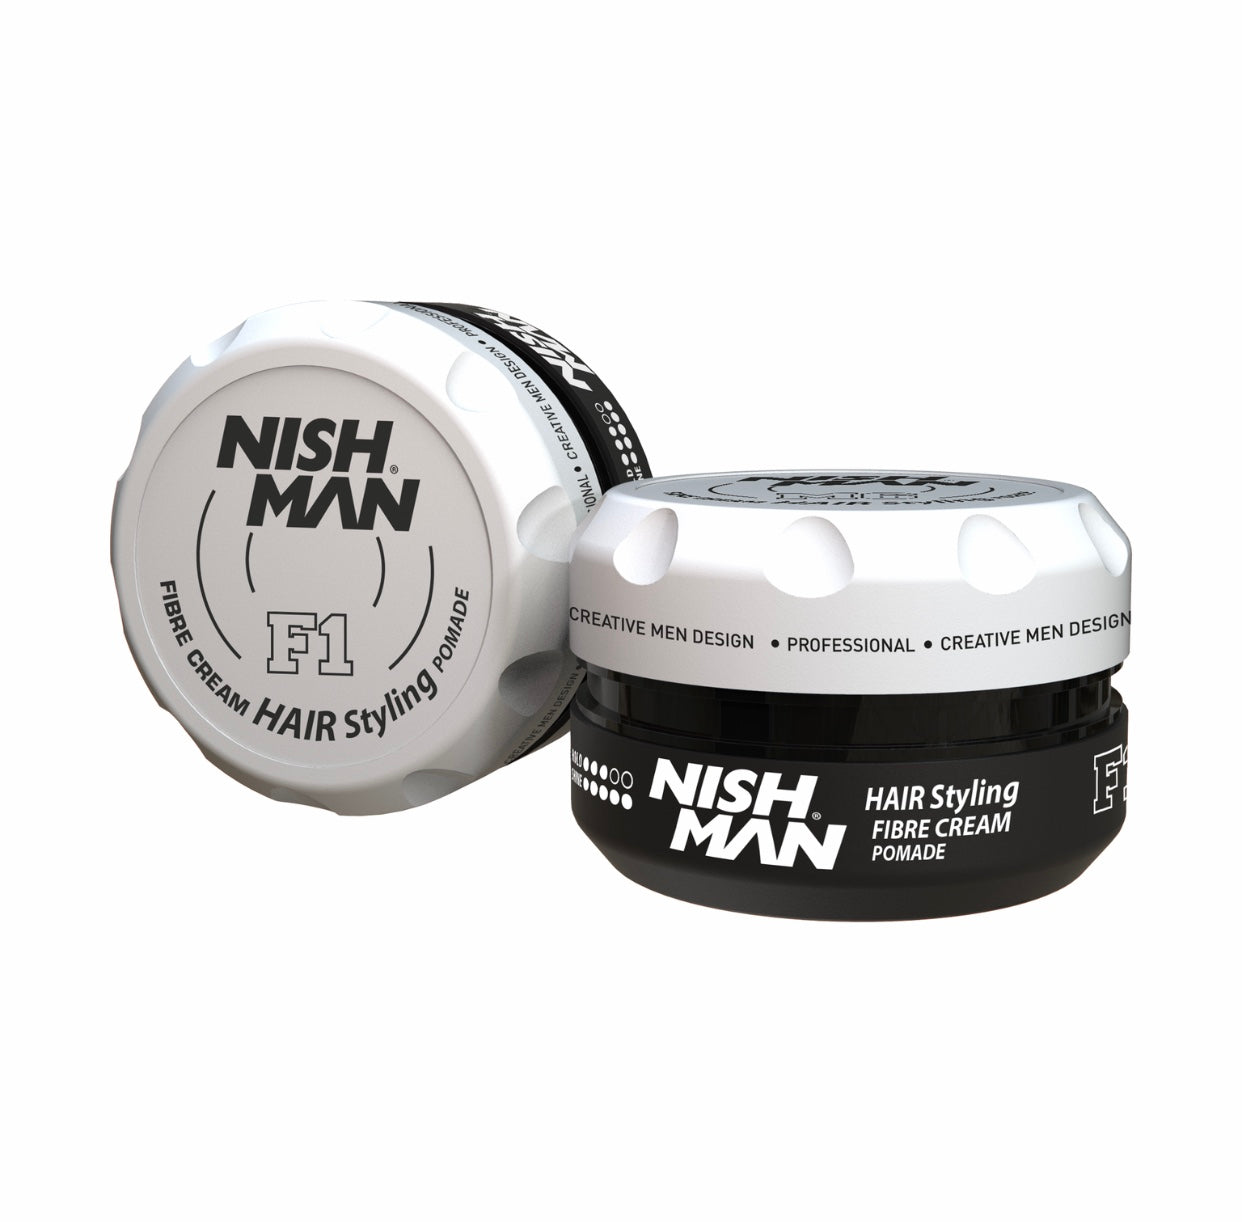 NISHMAN Hair Styling Fibre Cream Pomade - F1